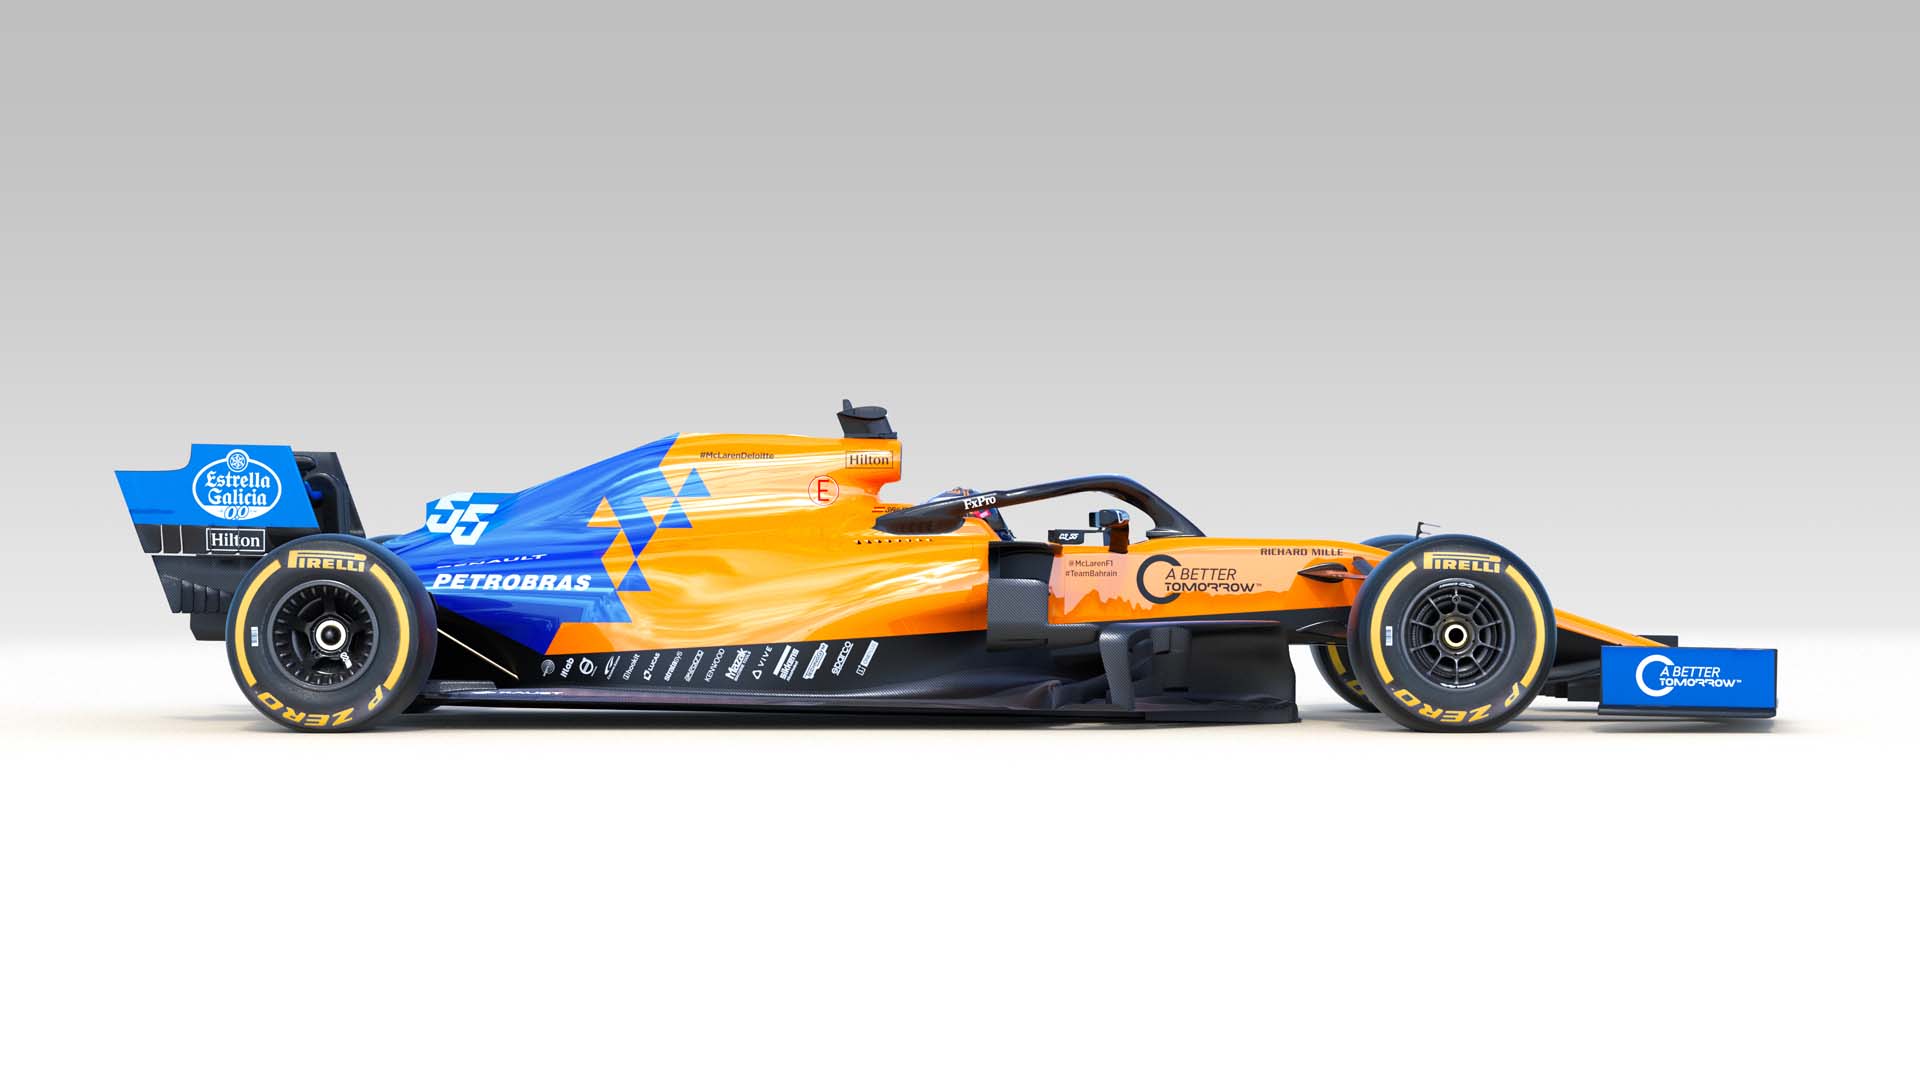 McLaren F1 Car Side View